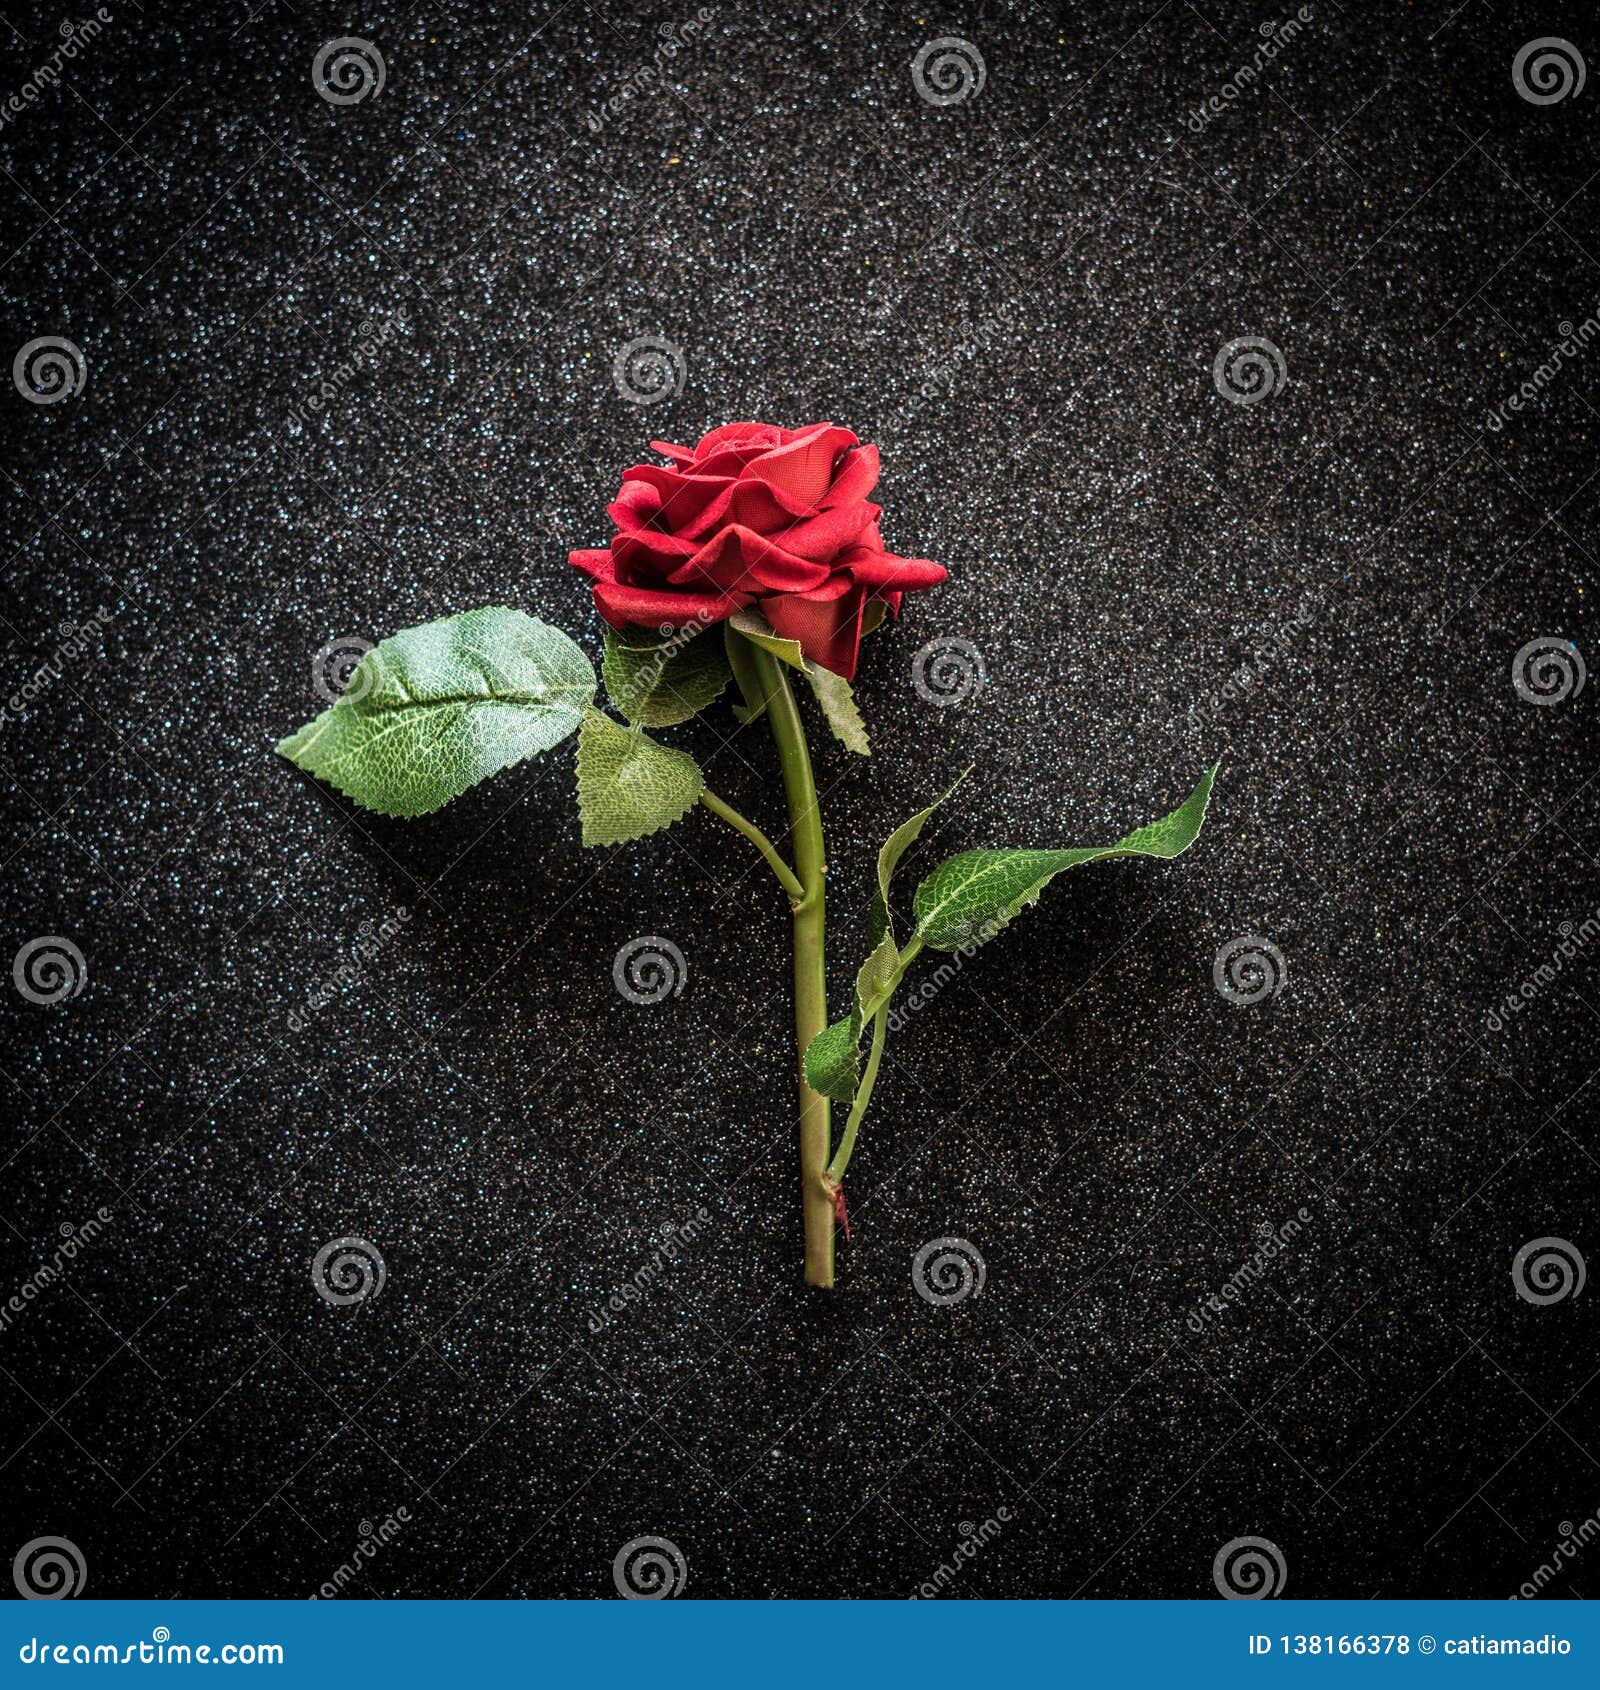 Red Rose Over Black Sparkling Background Stock Photo - Image of rose, love:  138166378